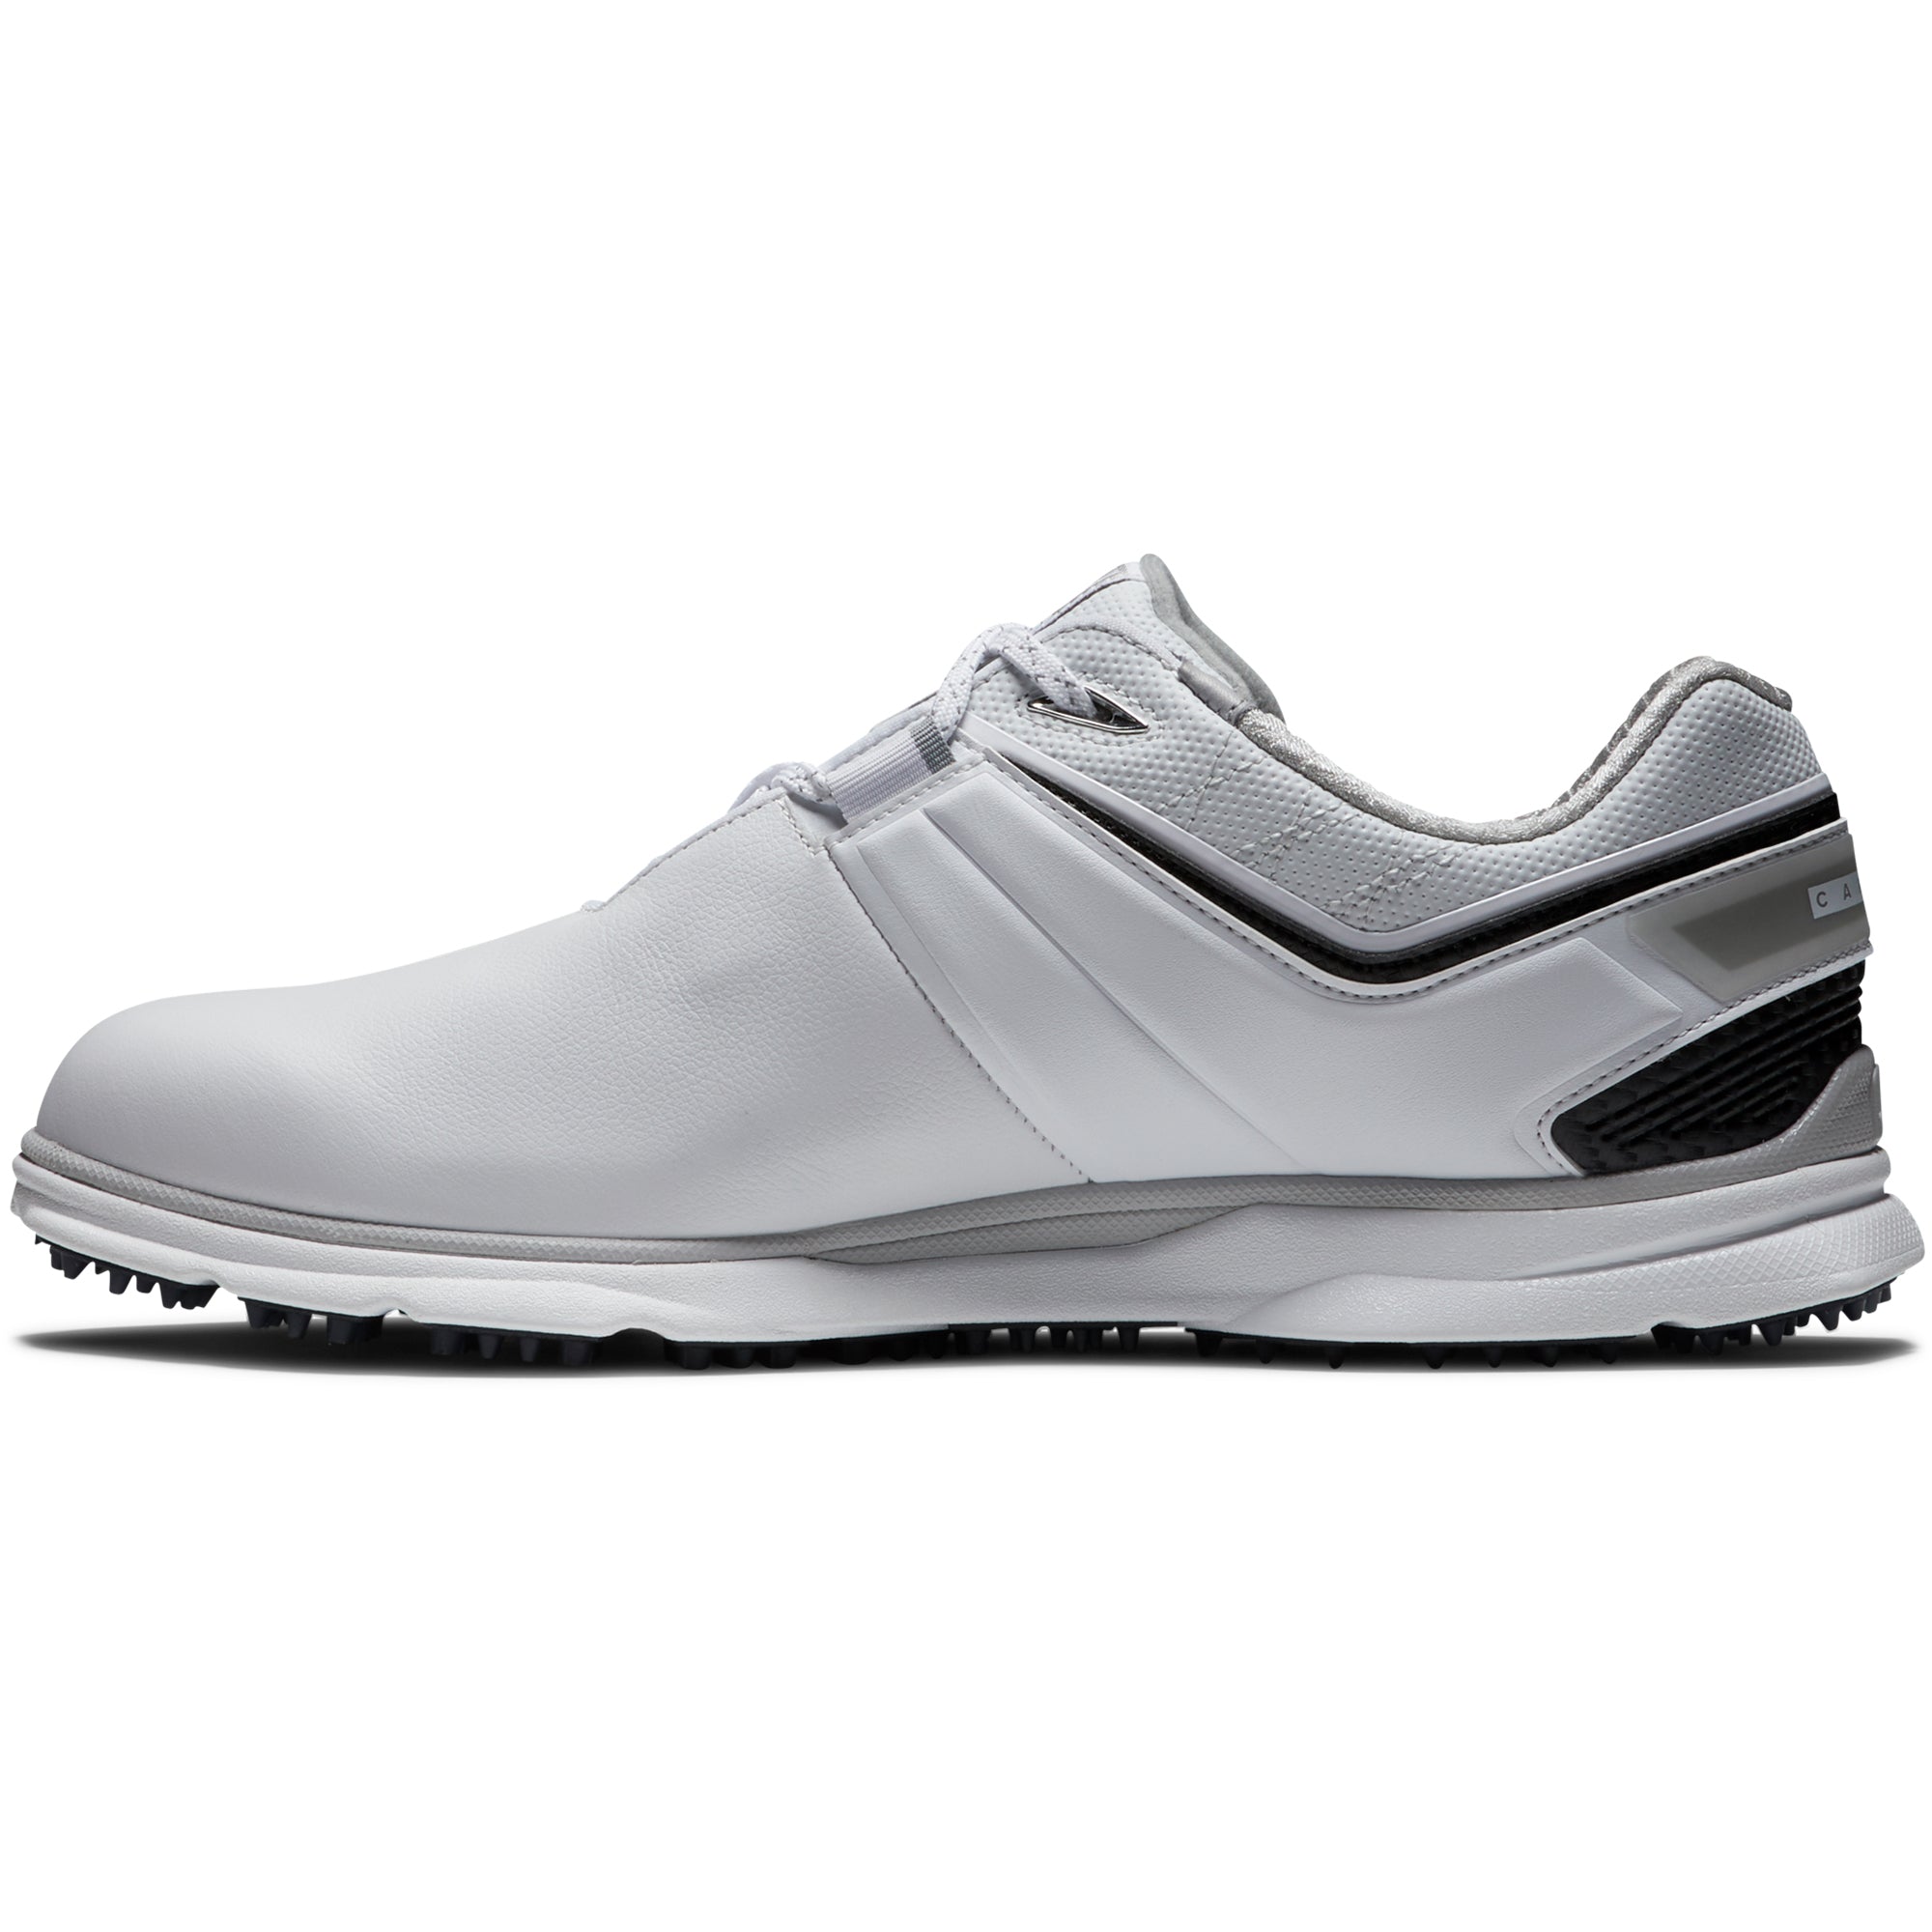 FootJoy Pro SL Carbon Golf Shoes 53079 White Black | Function18 ...